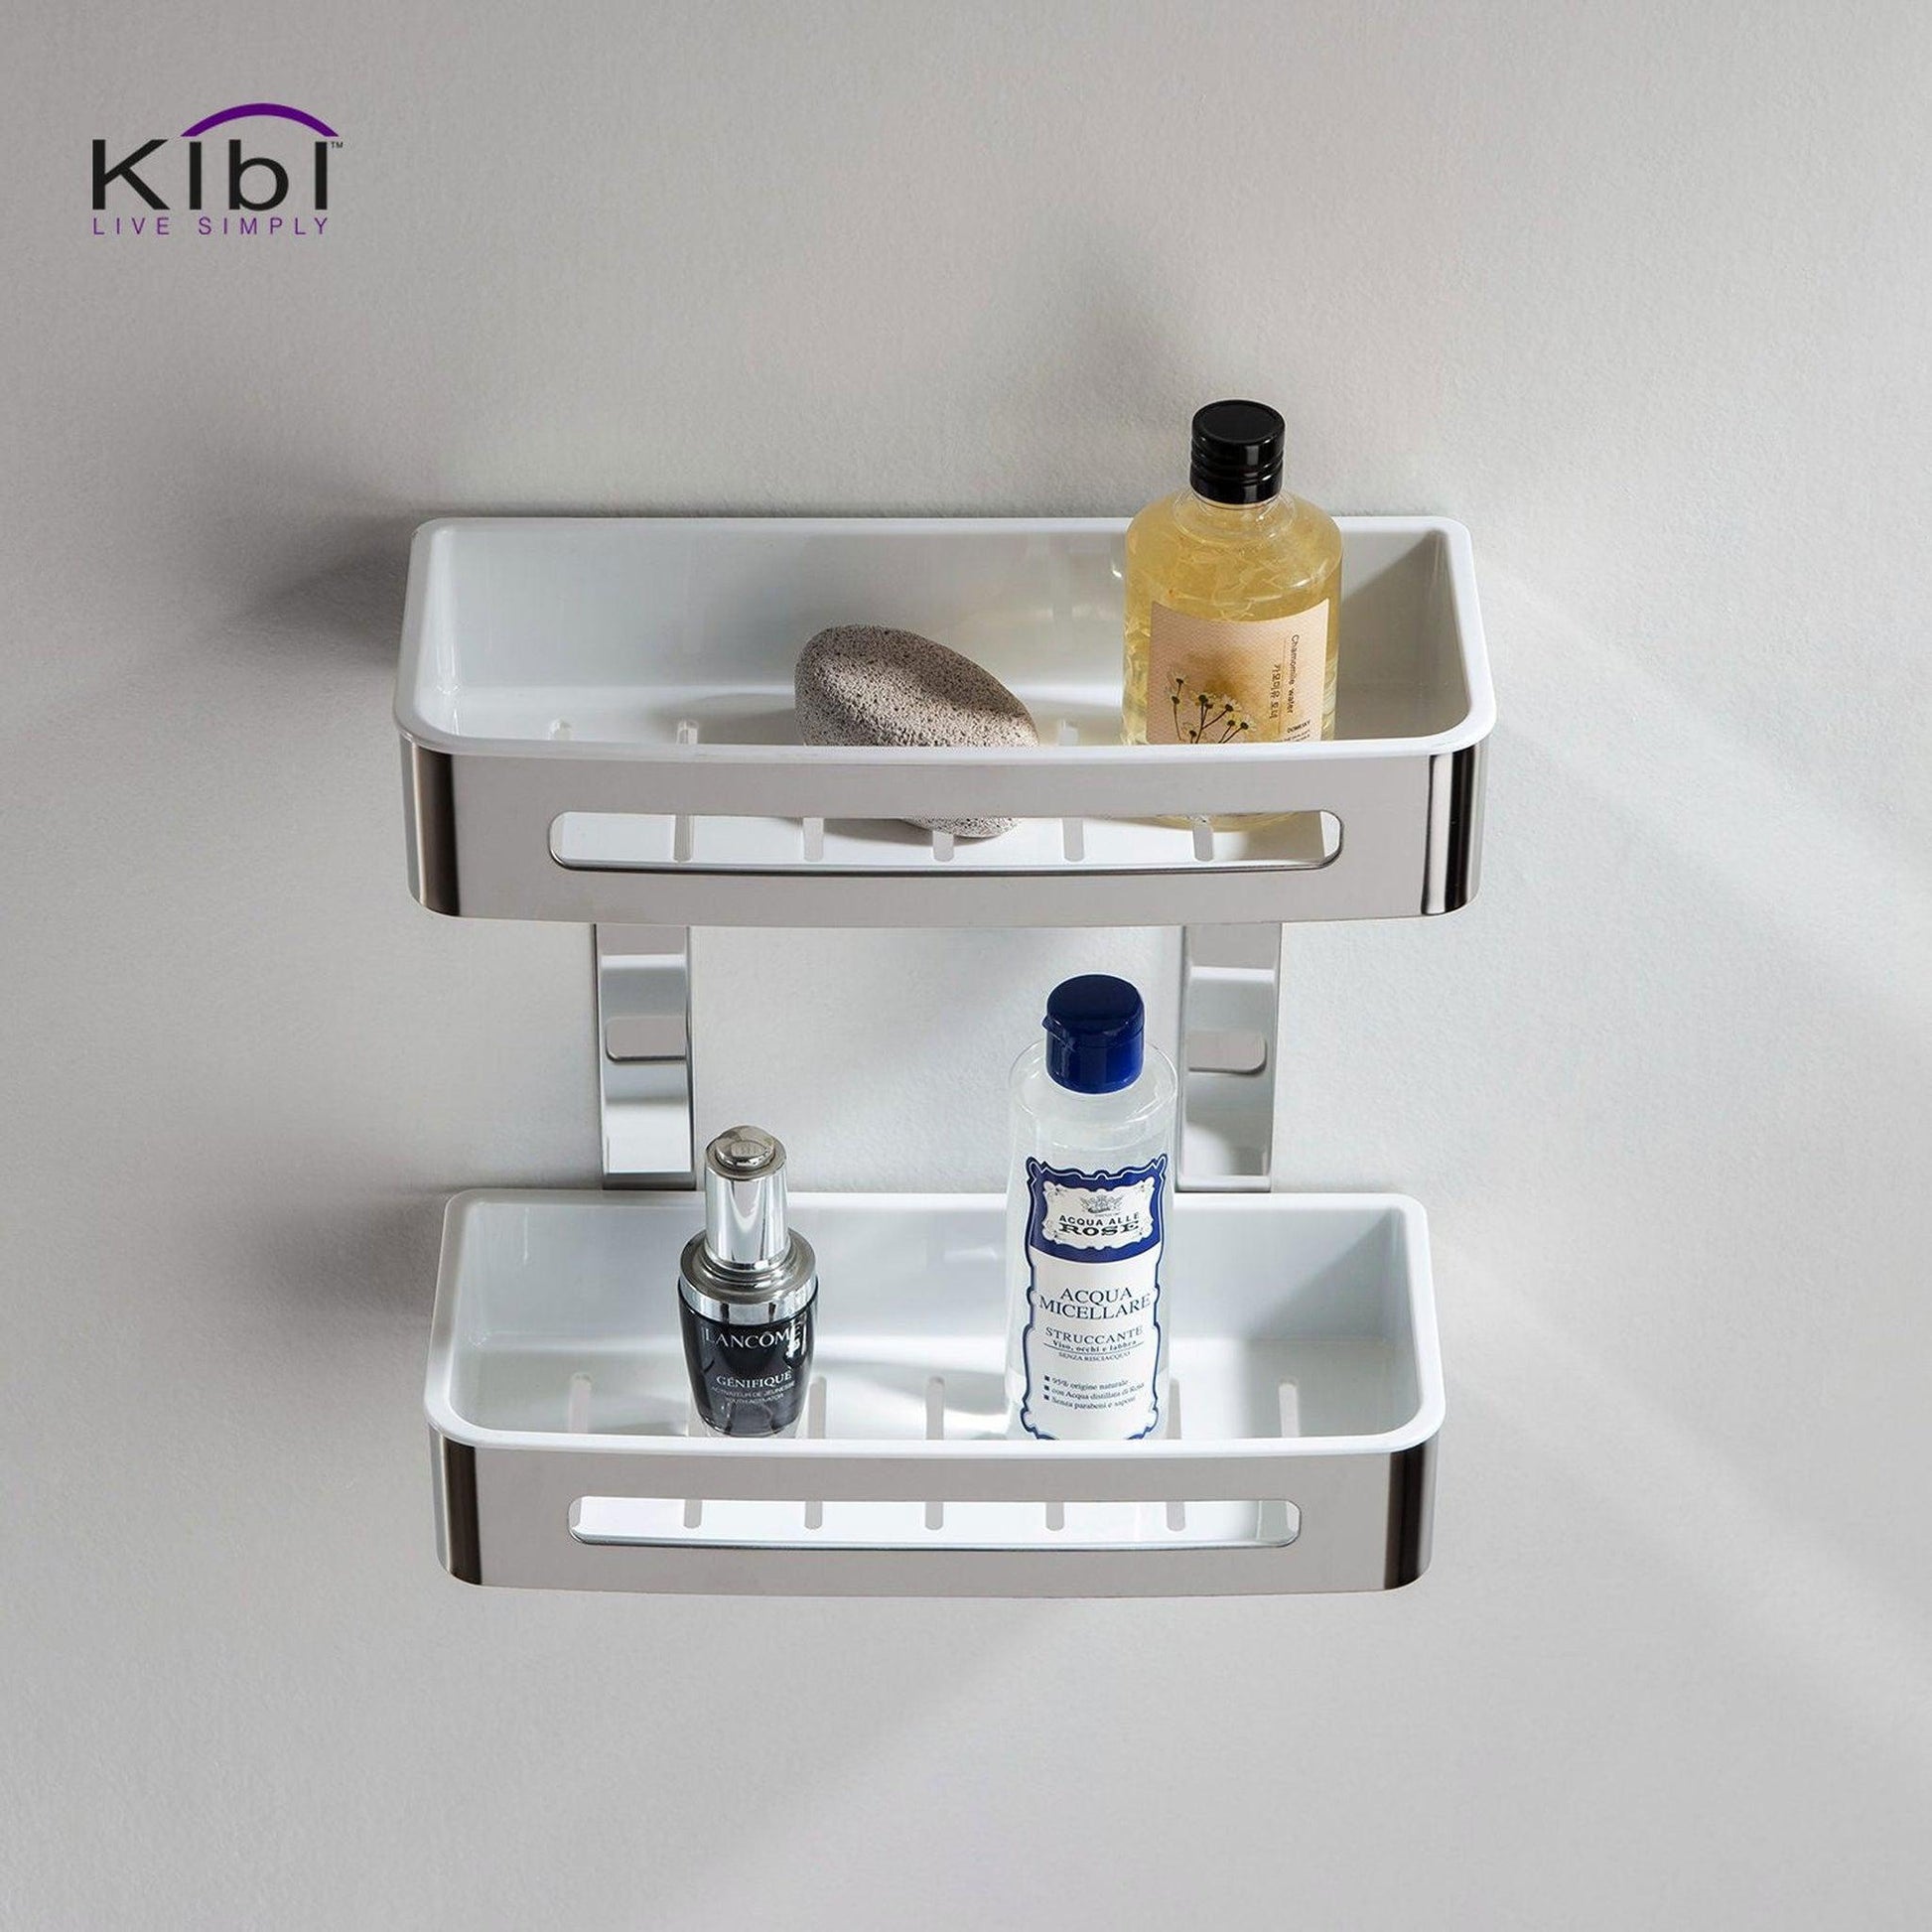 KIBI Deco Bathroom Double Shower Basket in Chrome Finish